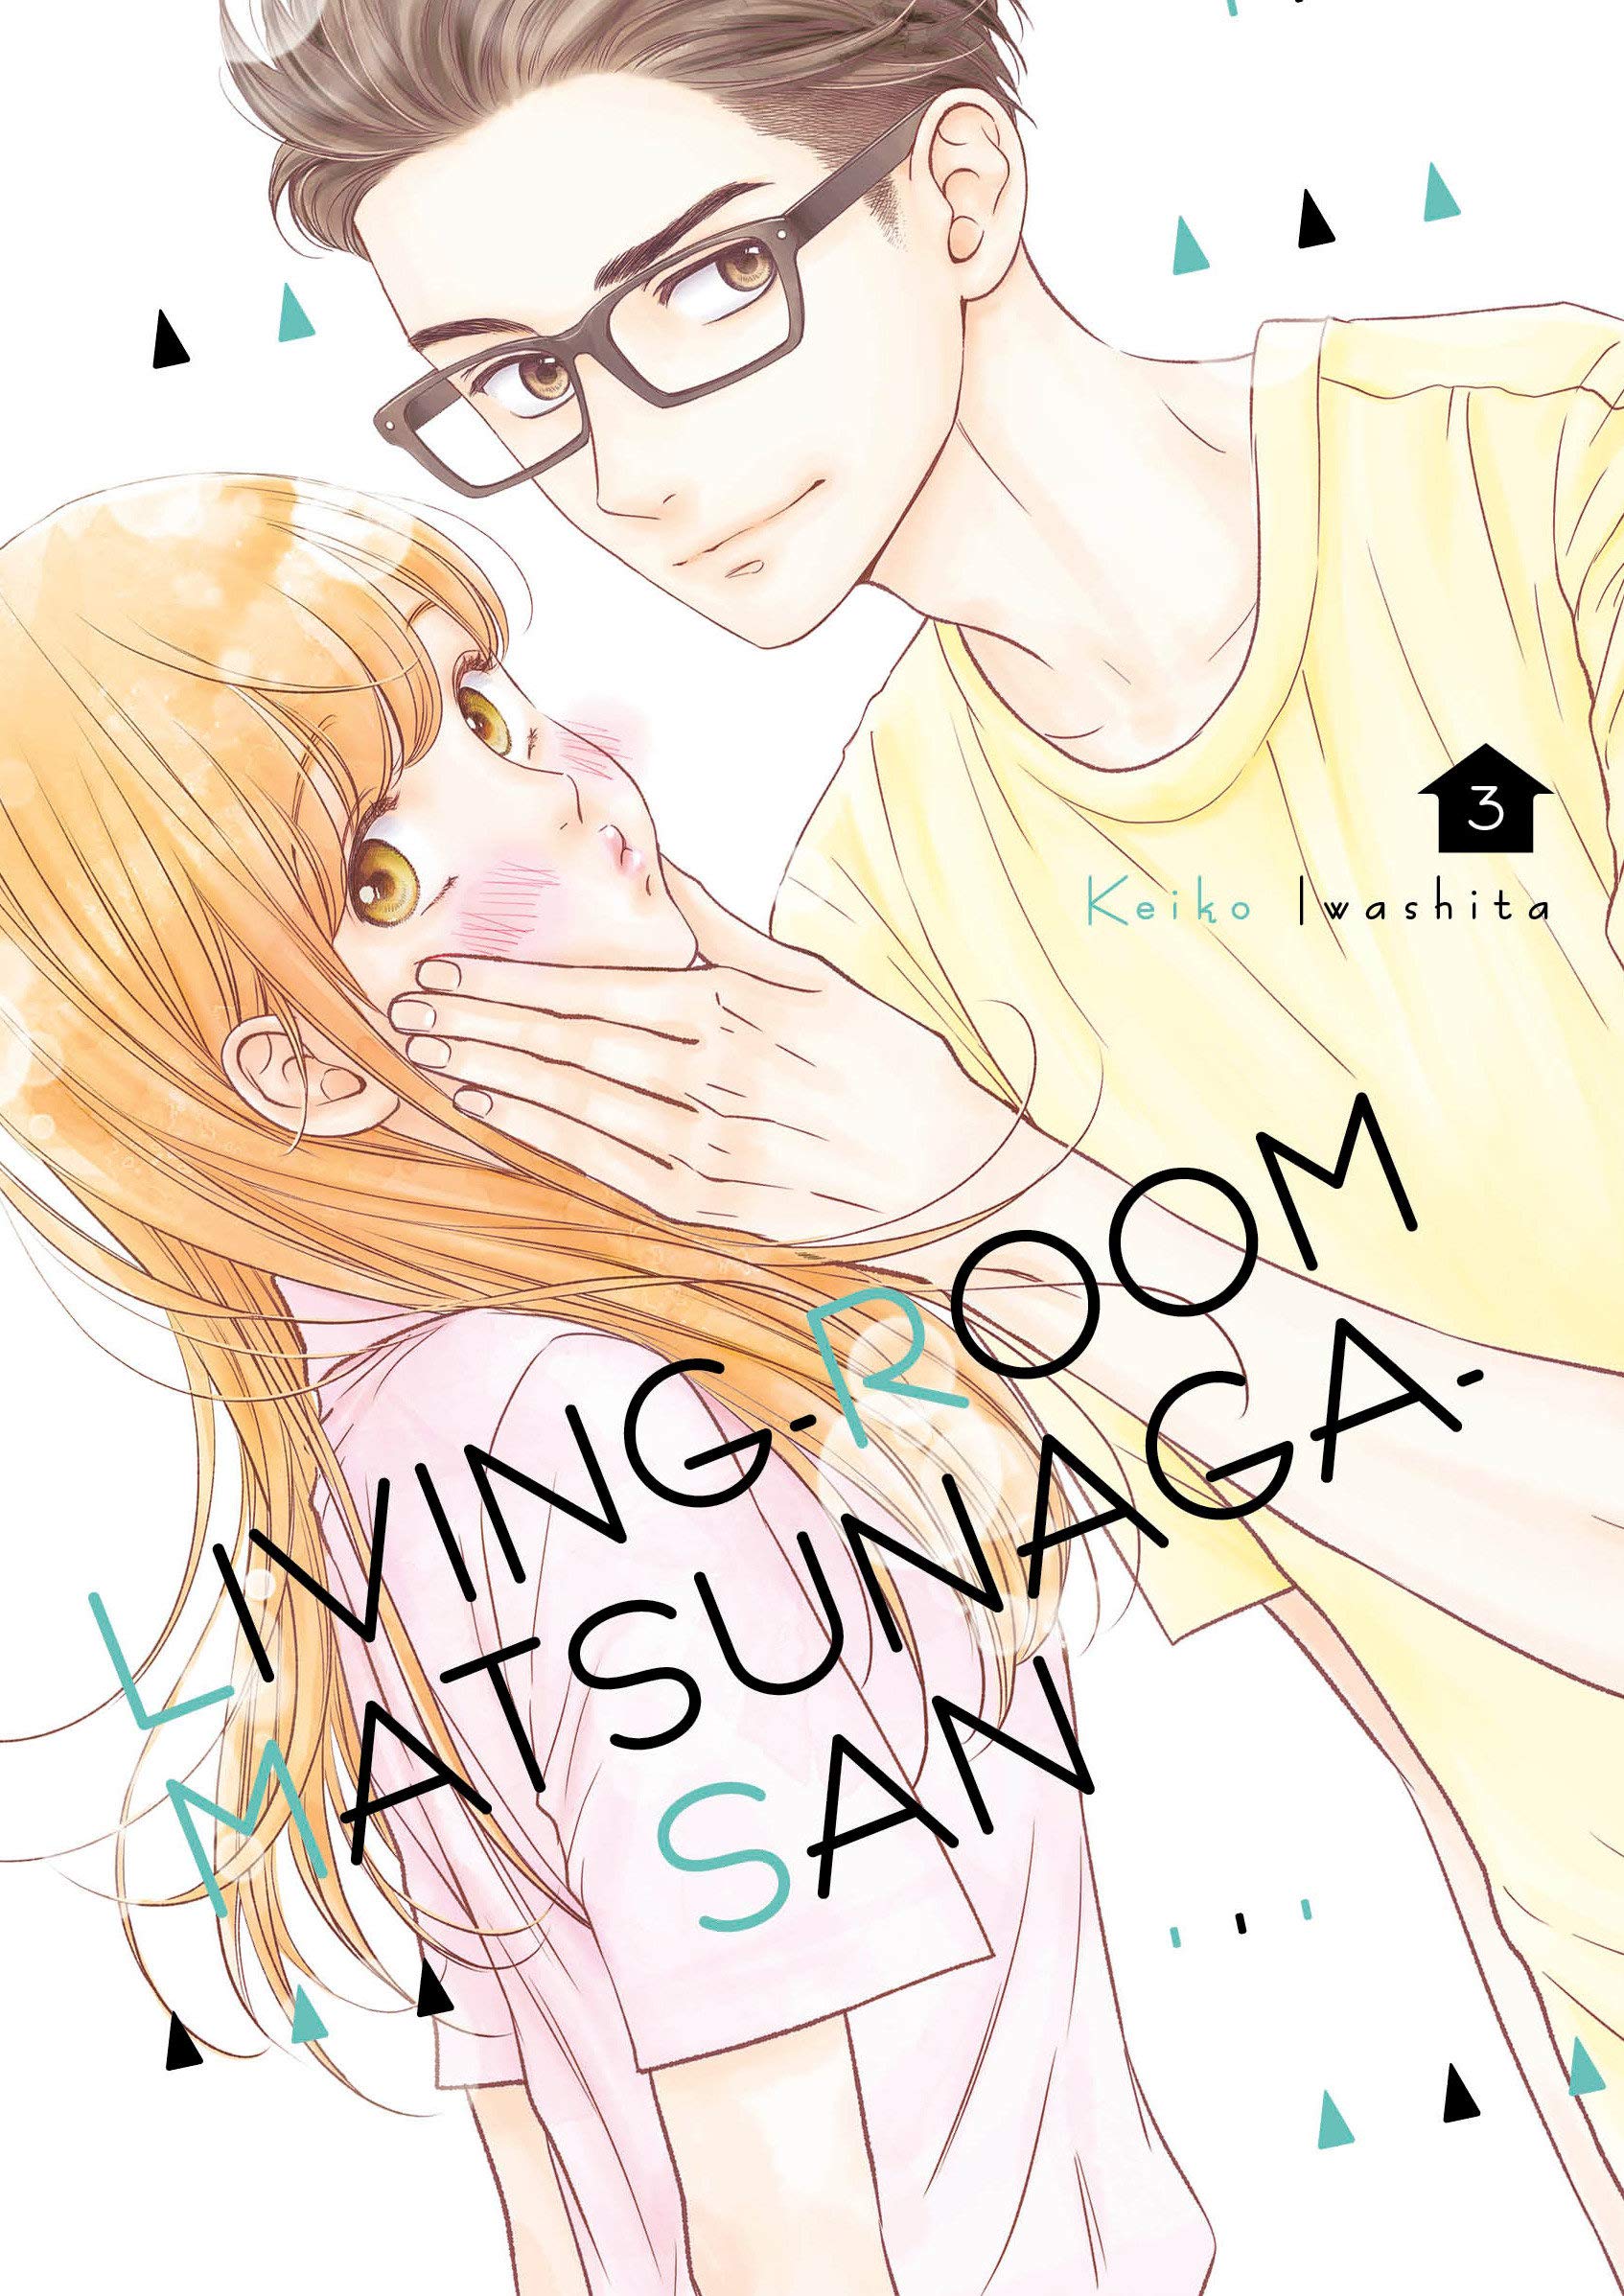 Living Room Matsunaga San Manga Volume 3